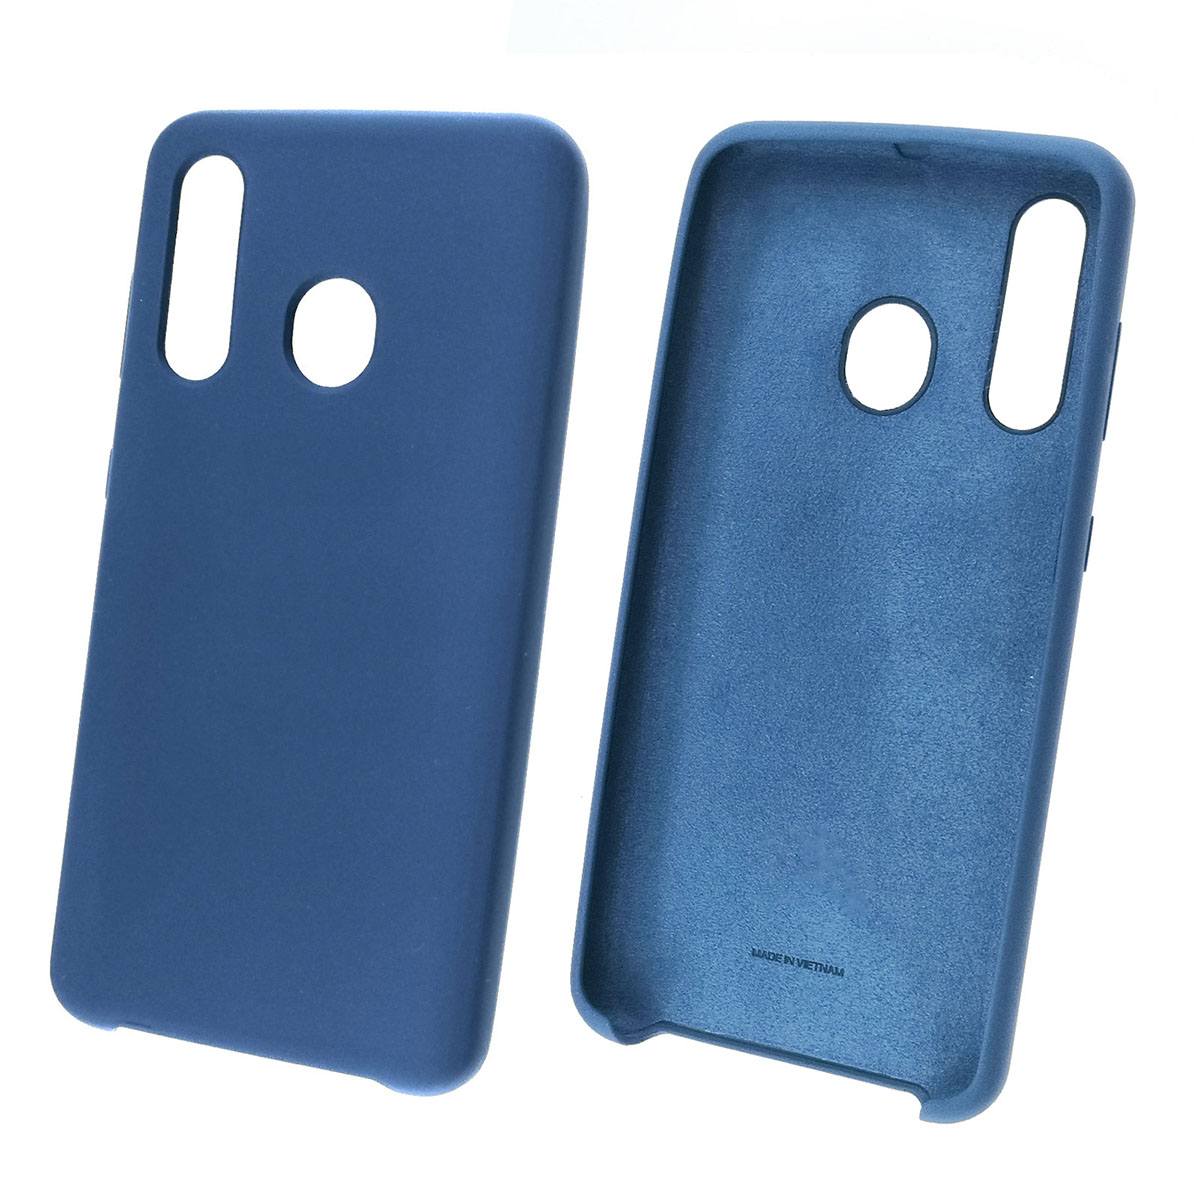 Чехол накладка Silicon Cover для SAMSUNG Galaxy A60 2019 (SM-A605), Galaxy M40 (SM-M405), силикон, бархат, цвет темно синий.